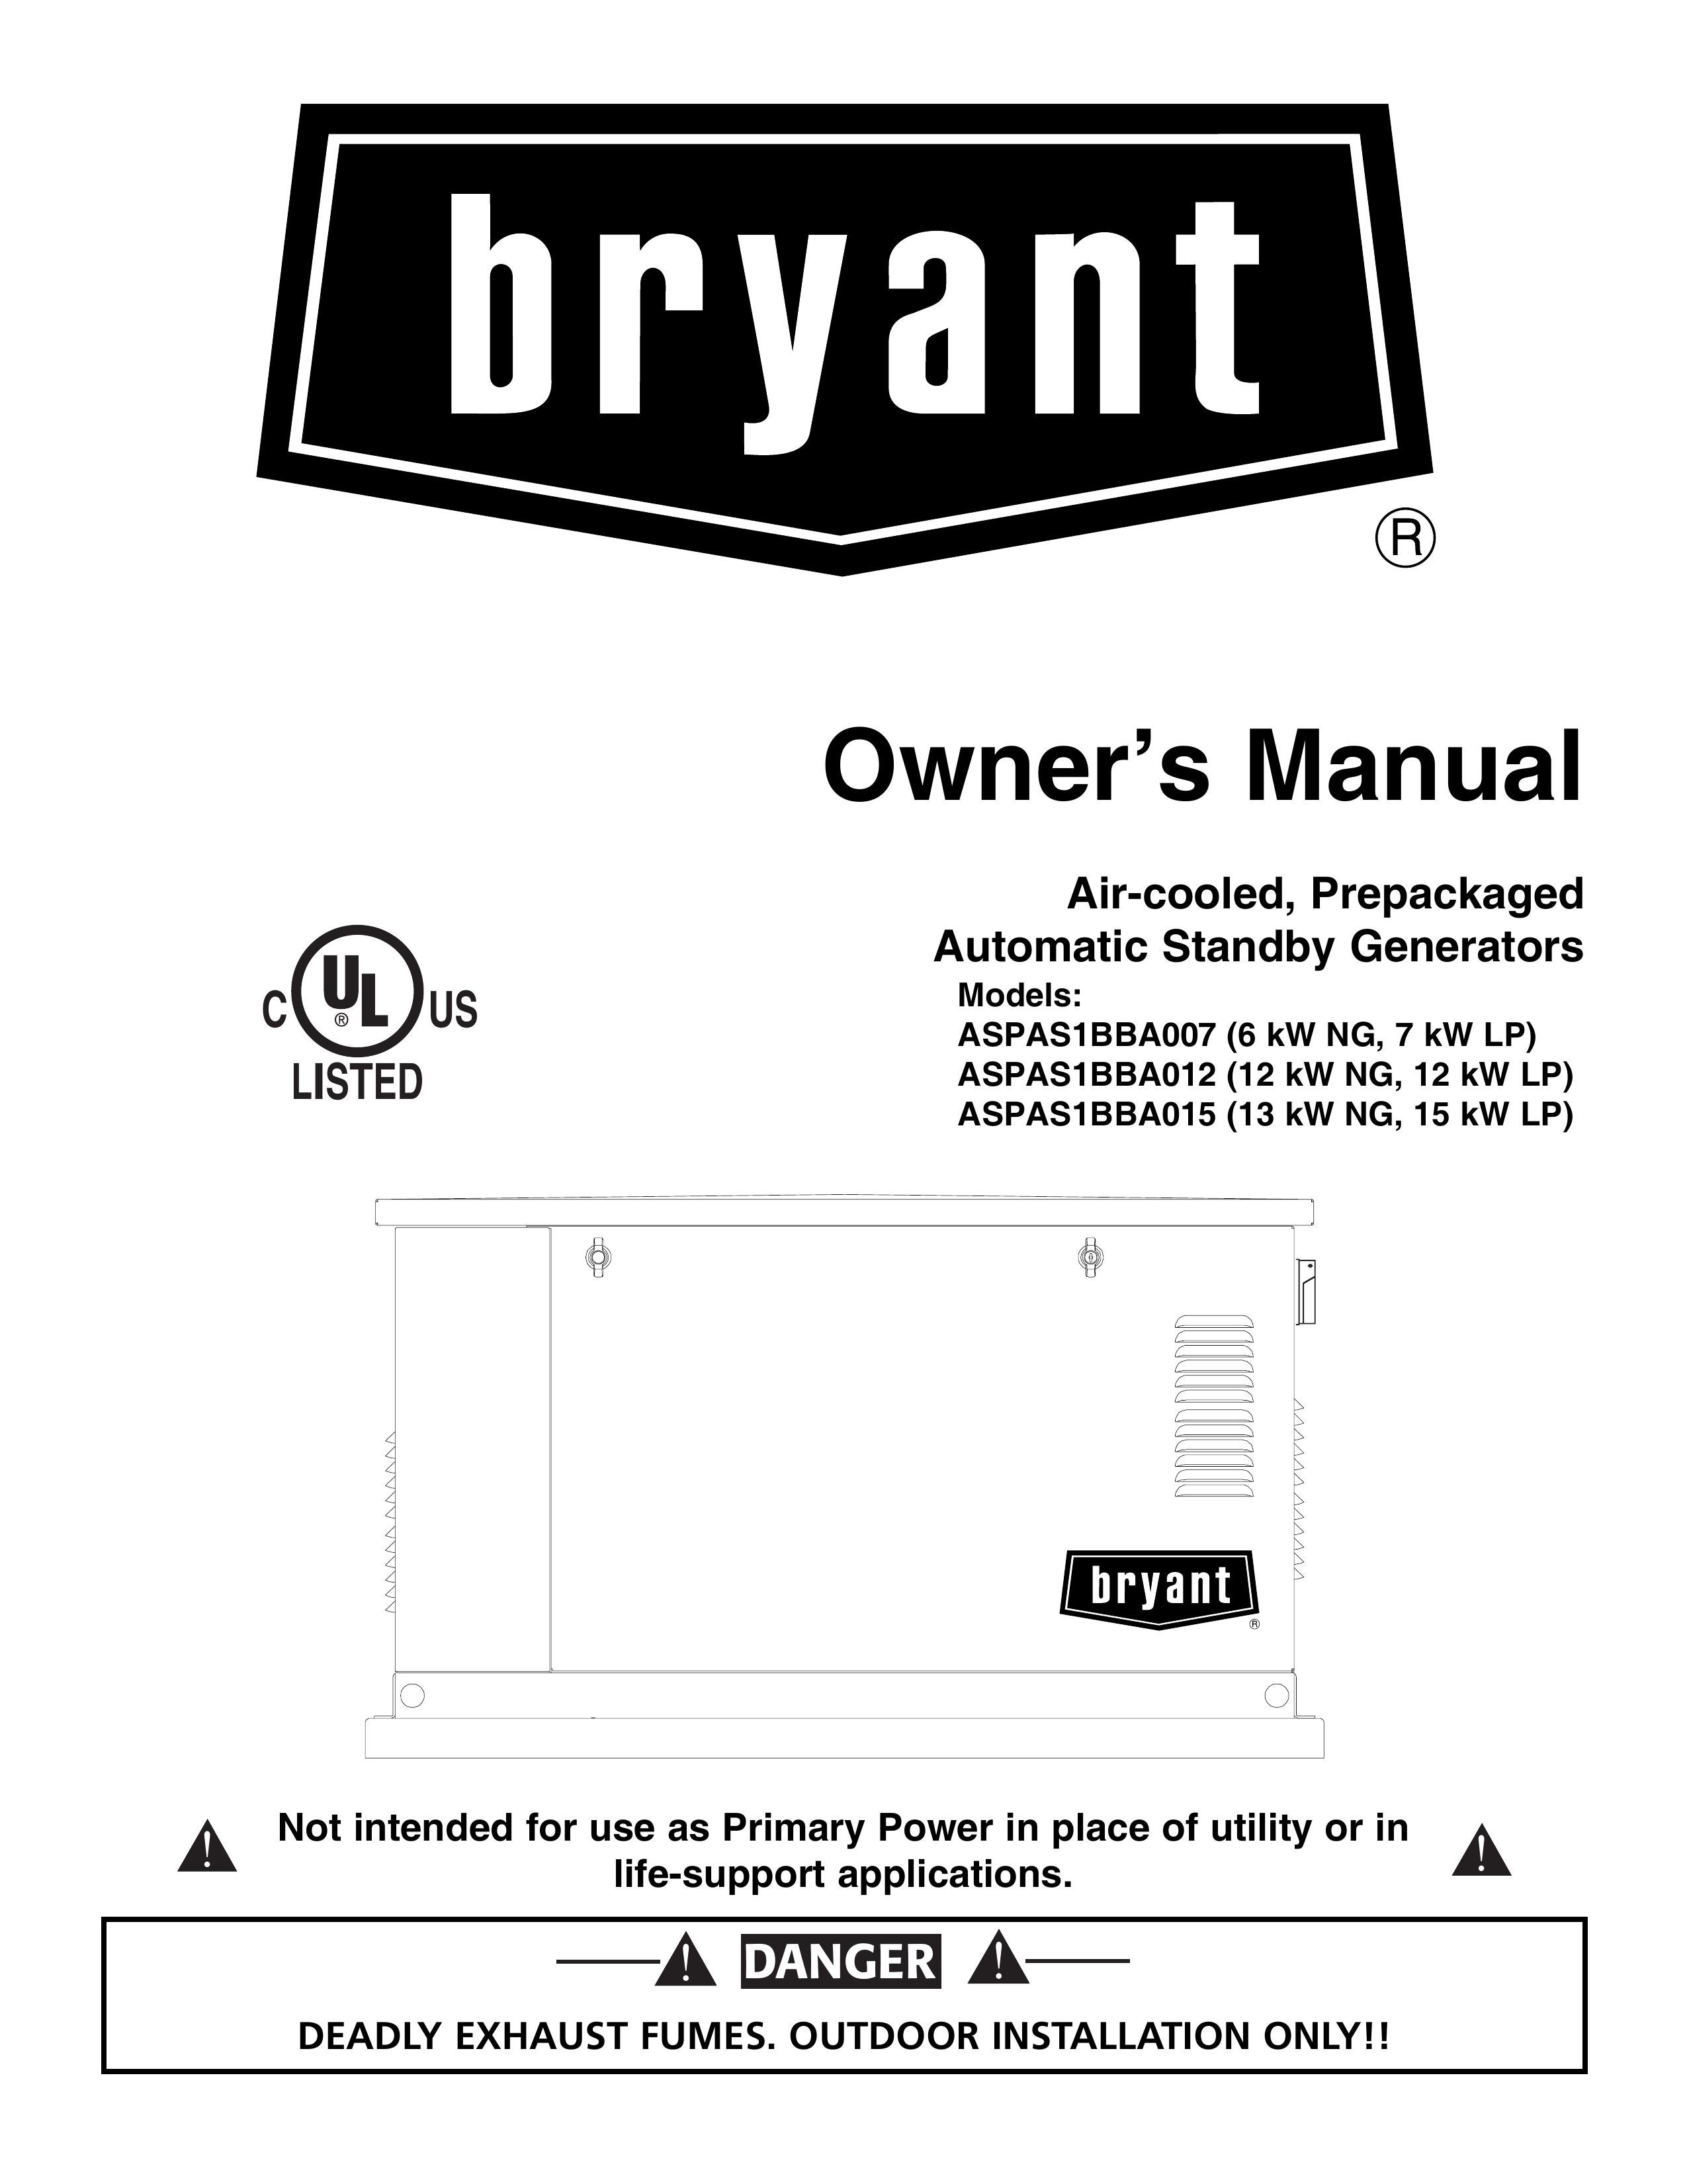 Bryant ASPAS1BBA012 Portable Generator User Manual